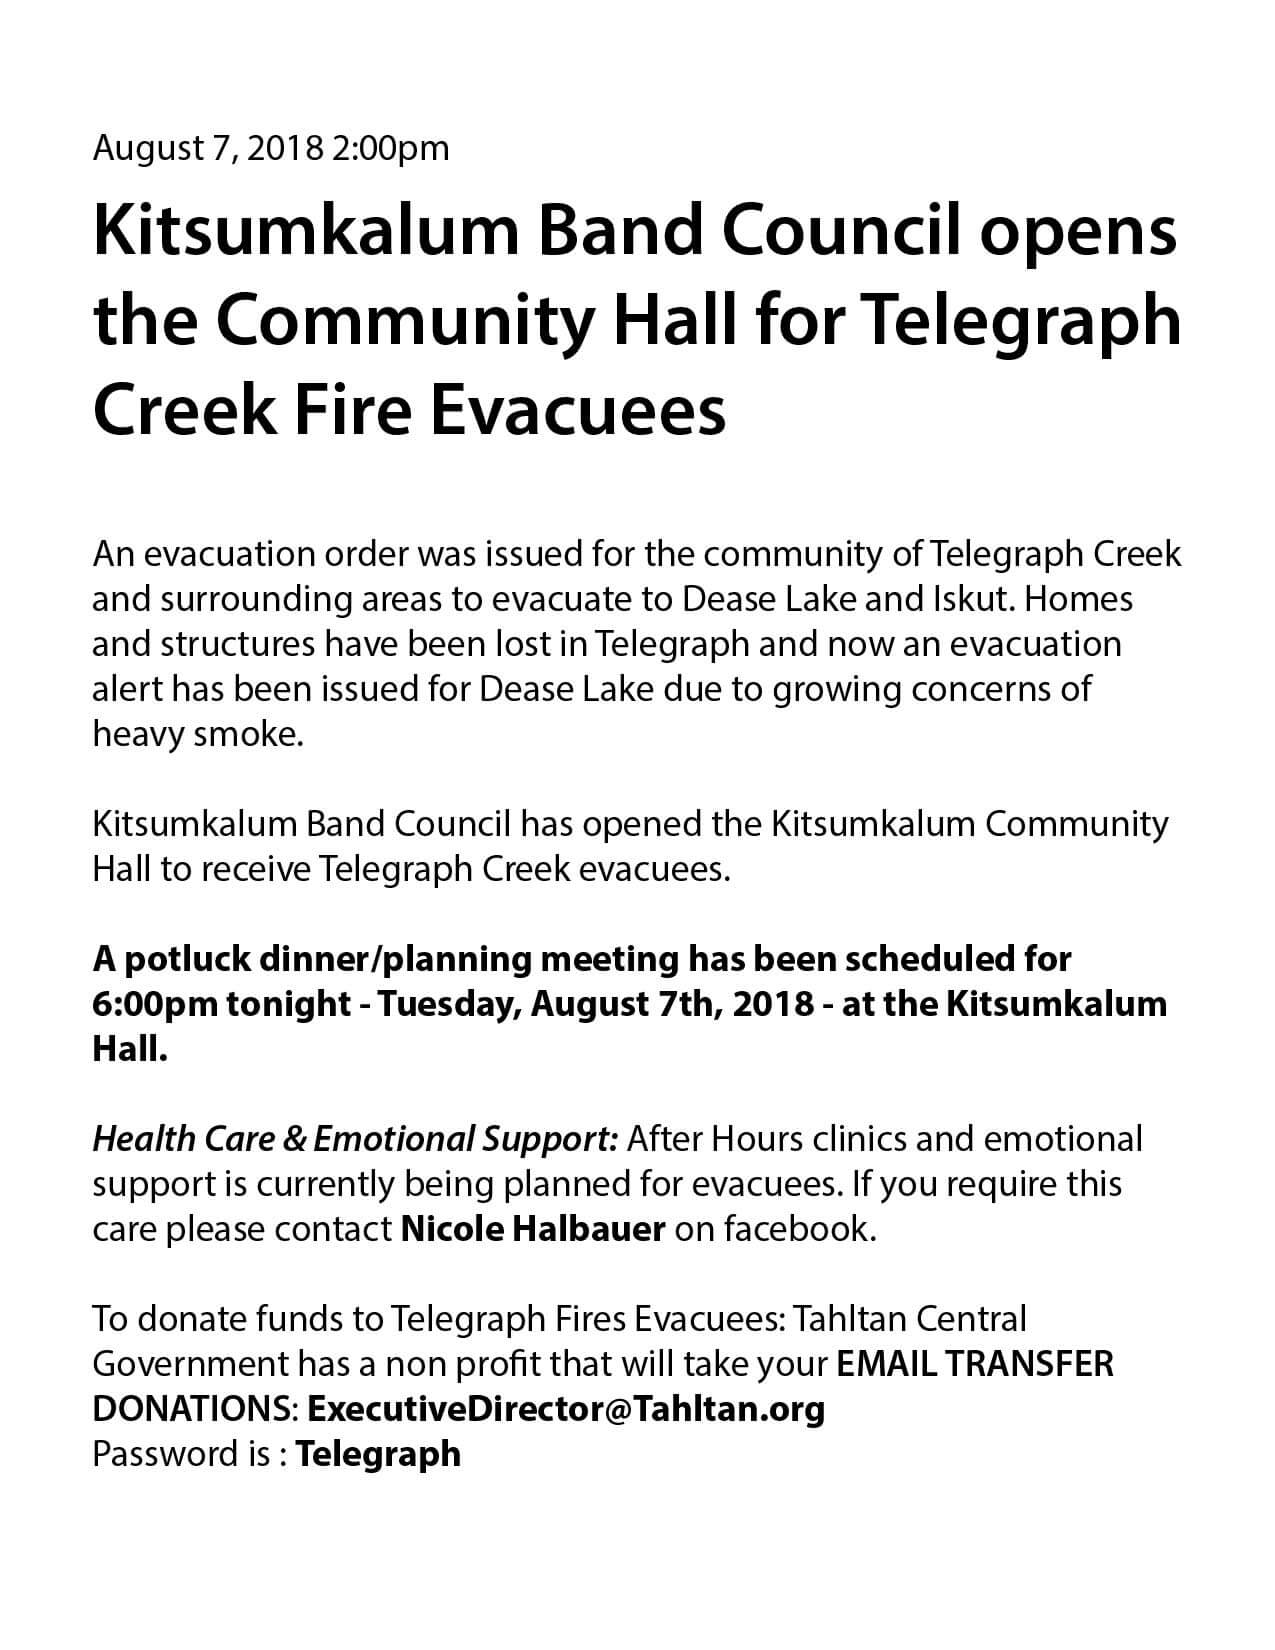 Kitsumkalum Hall Open for Telegraph Creek Fire Evacuees